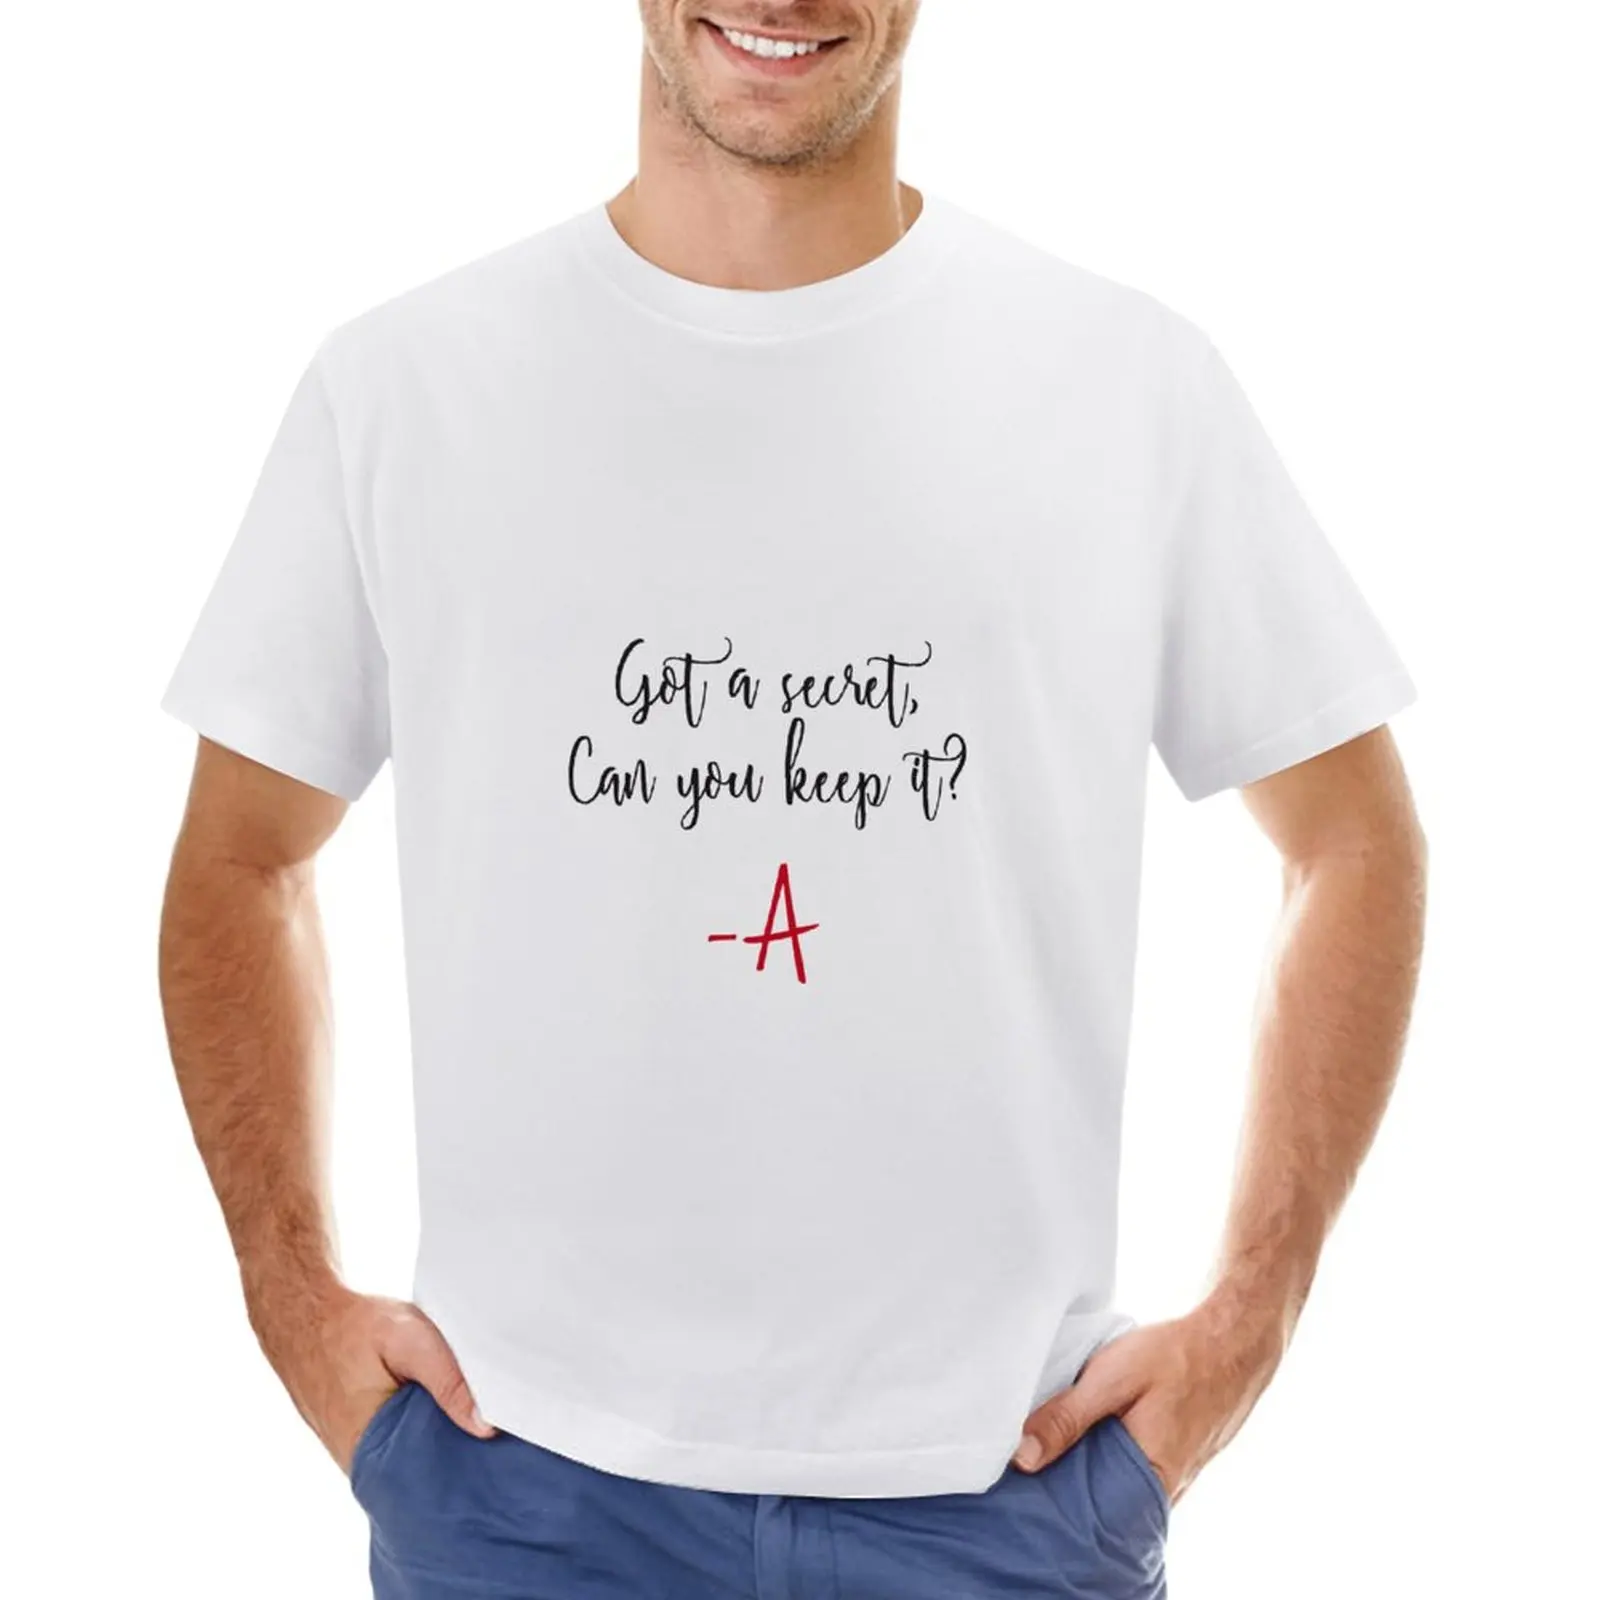 

Got a secret, Can you keep it T-Shirt quick drying shirts graphic tees t shirt for men